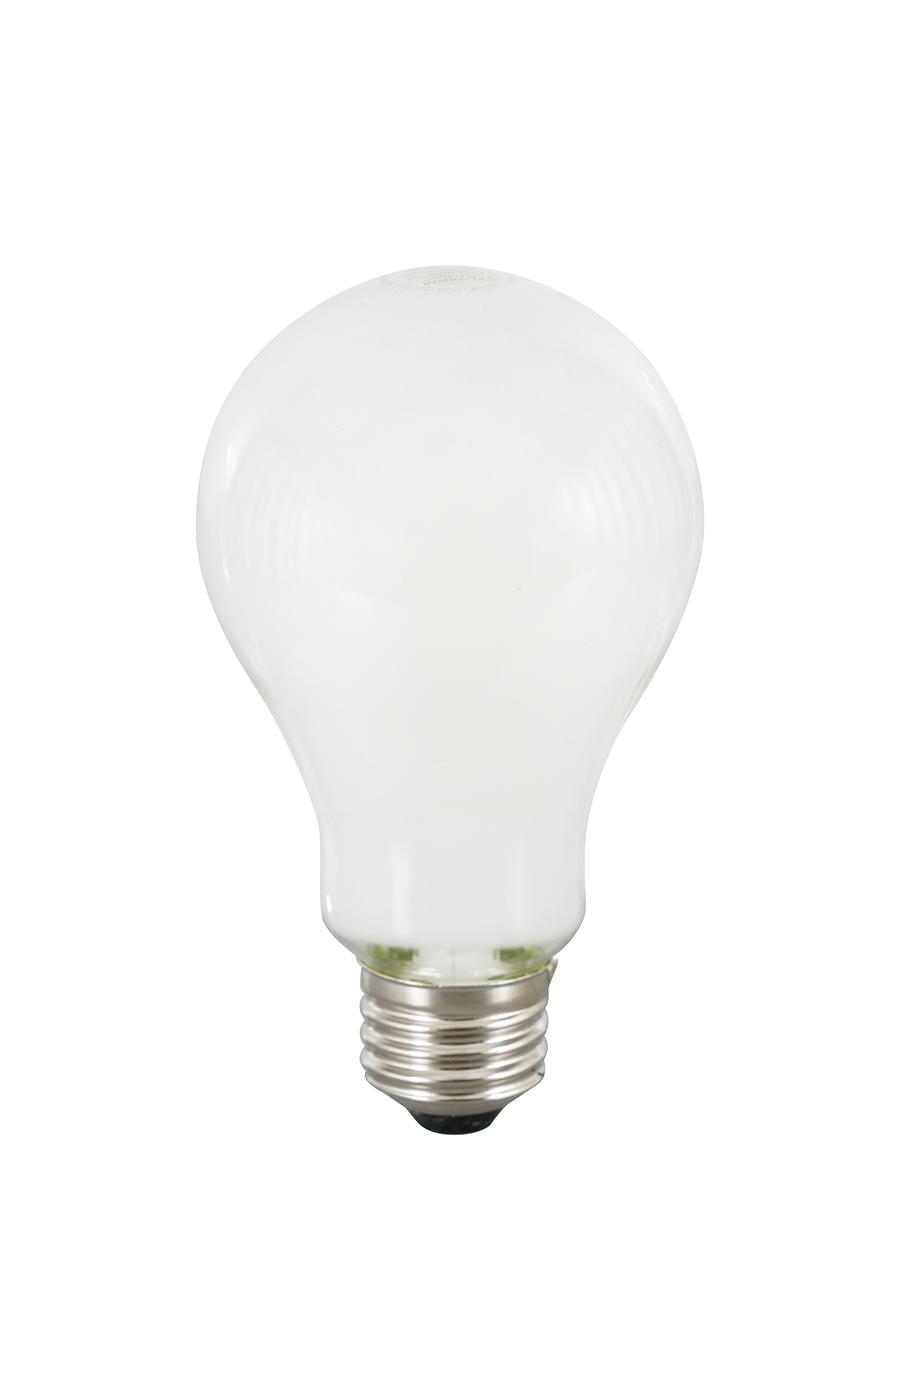 Sylvania TruWave A21 100-Watt Frosted LED Light Bulbs - Soft White; image 2 of 2